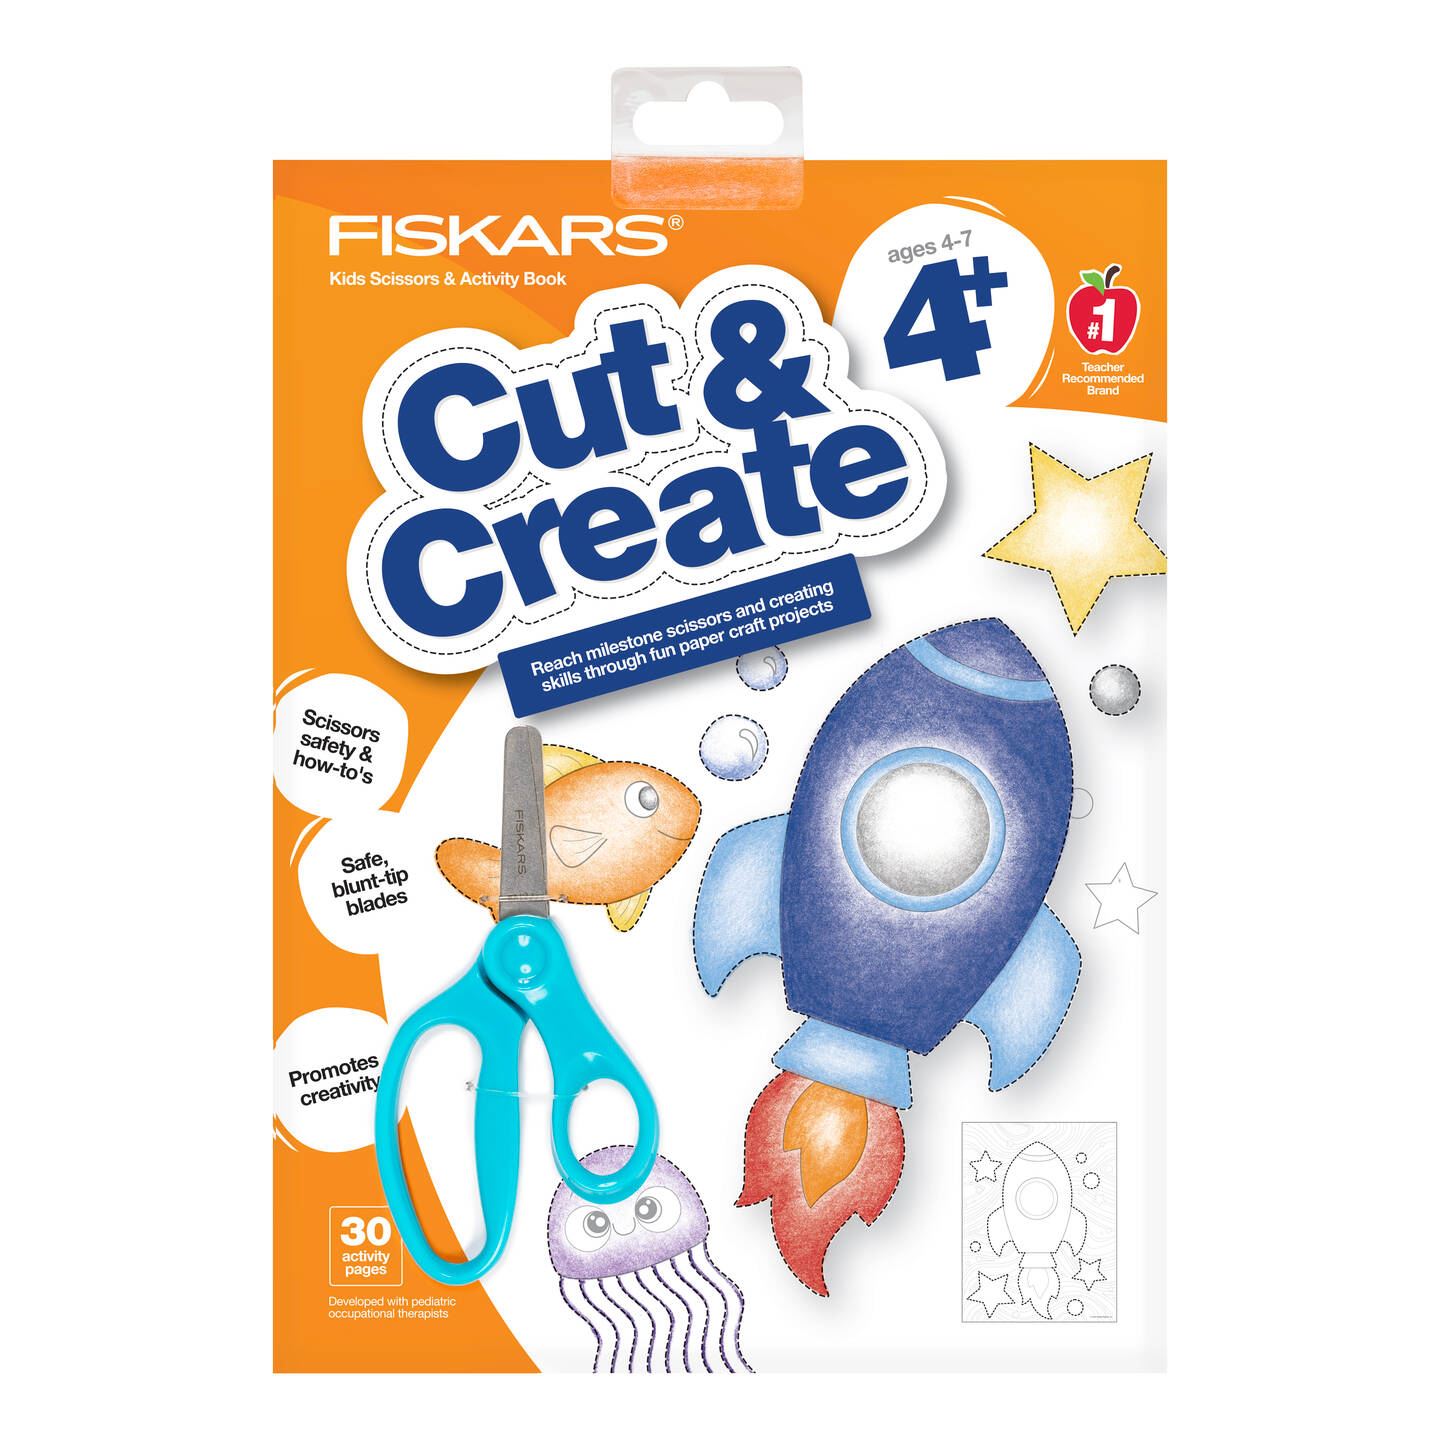 Fiskars Blunt Tip 5 Children Safety Scissors, Color May Vary